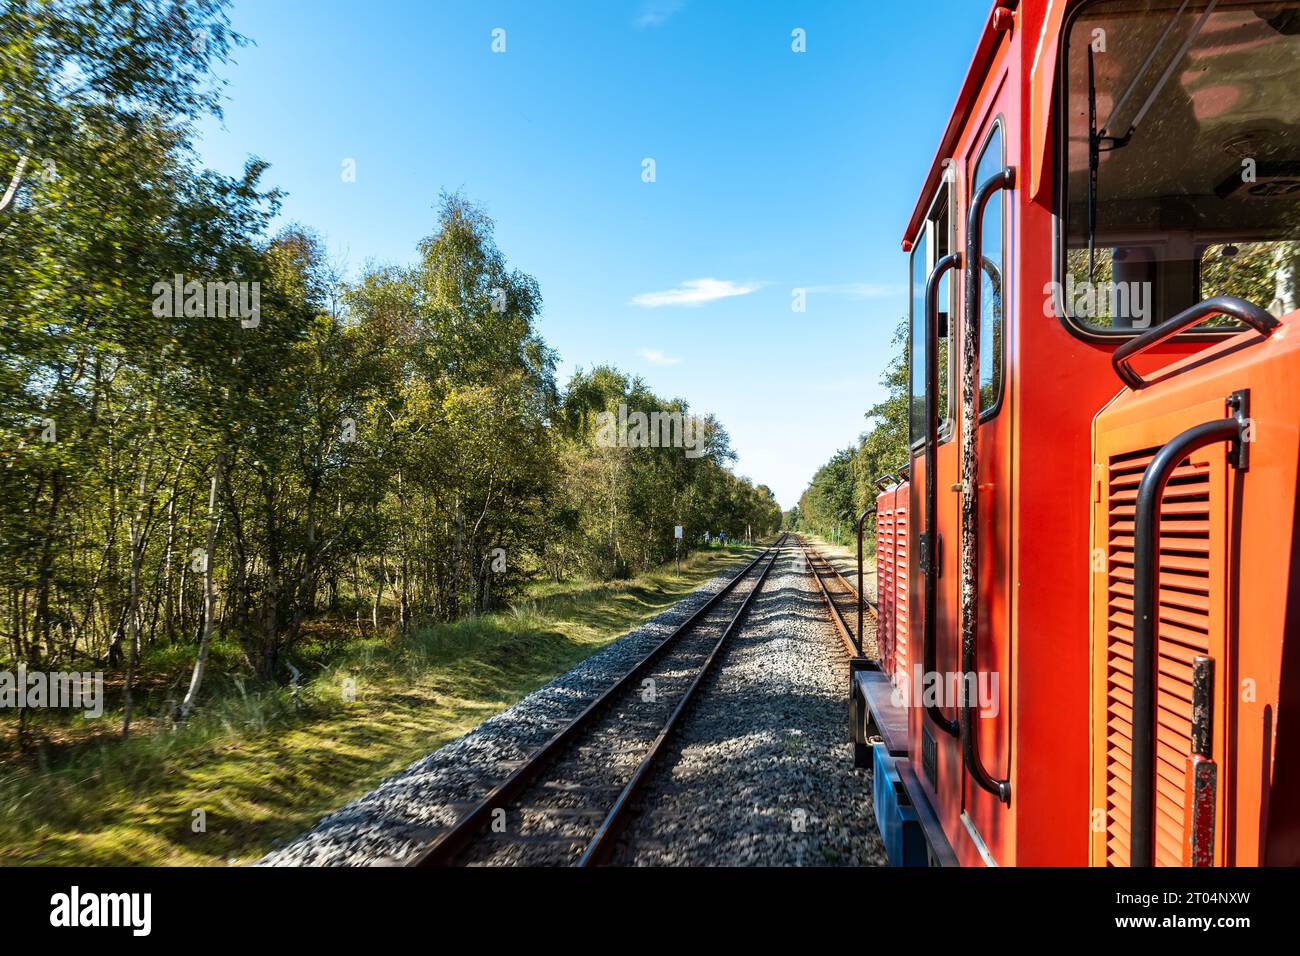 The famous passenger train of the german island of borkum on tour Stock Photo